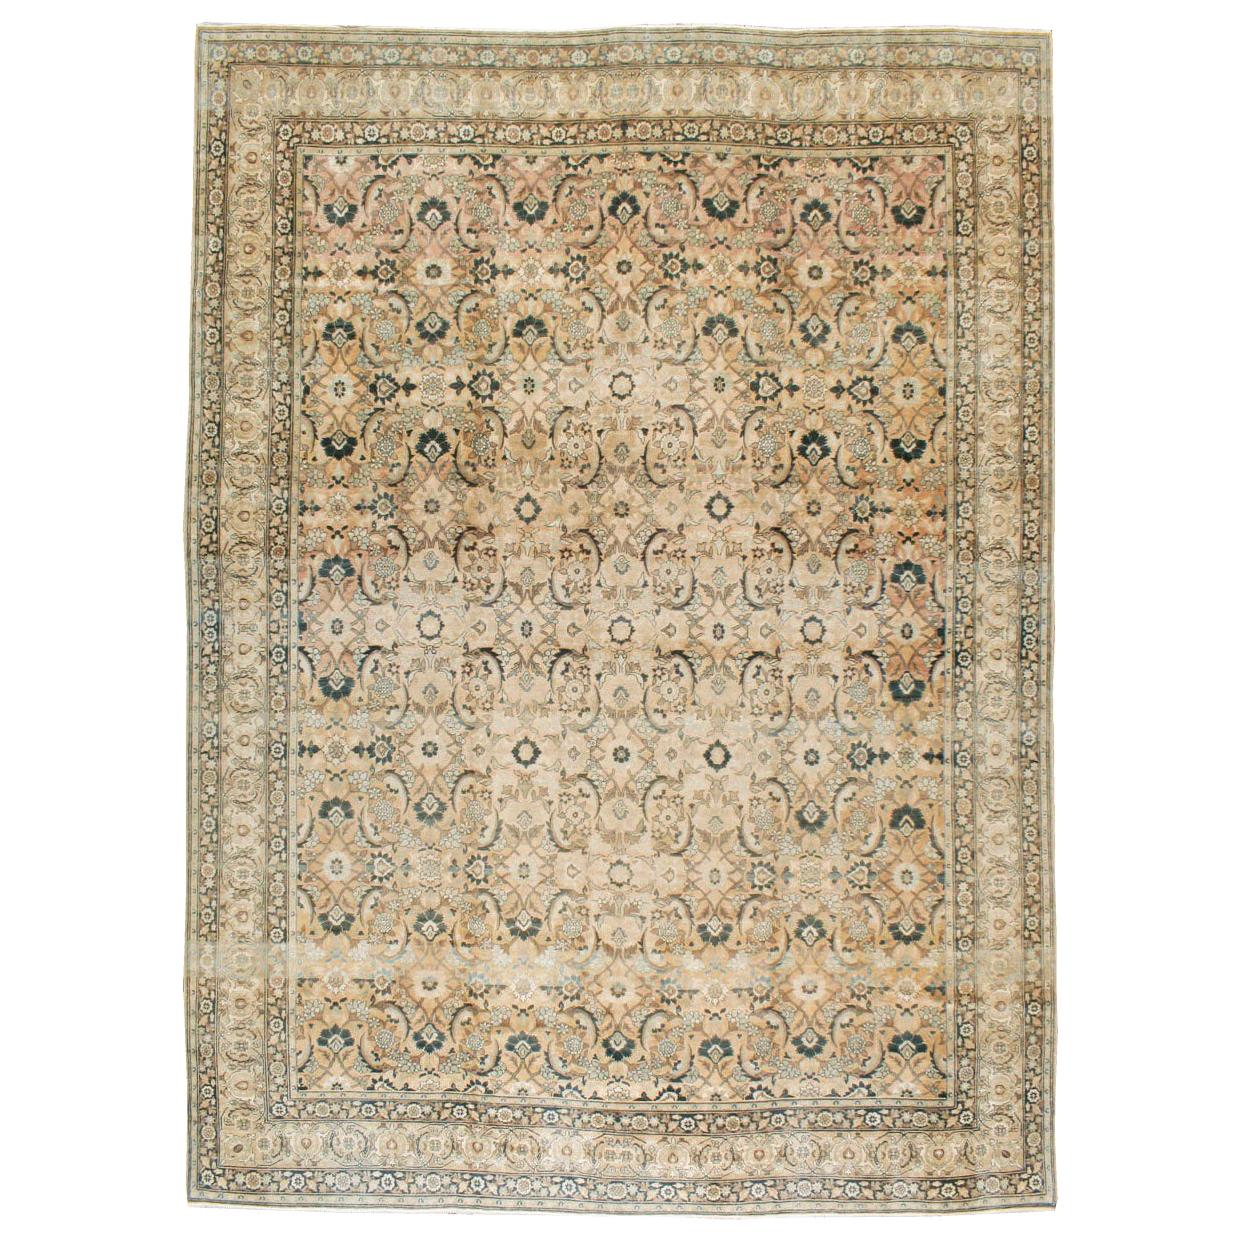 Early 20th Century Handmade Persian Lavar Kerman Room Size Carpet, circa 1920 For Sale